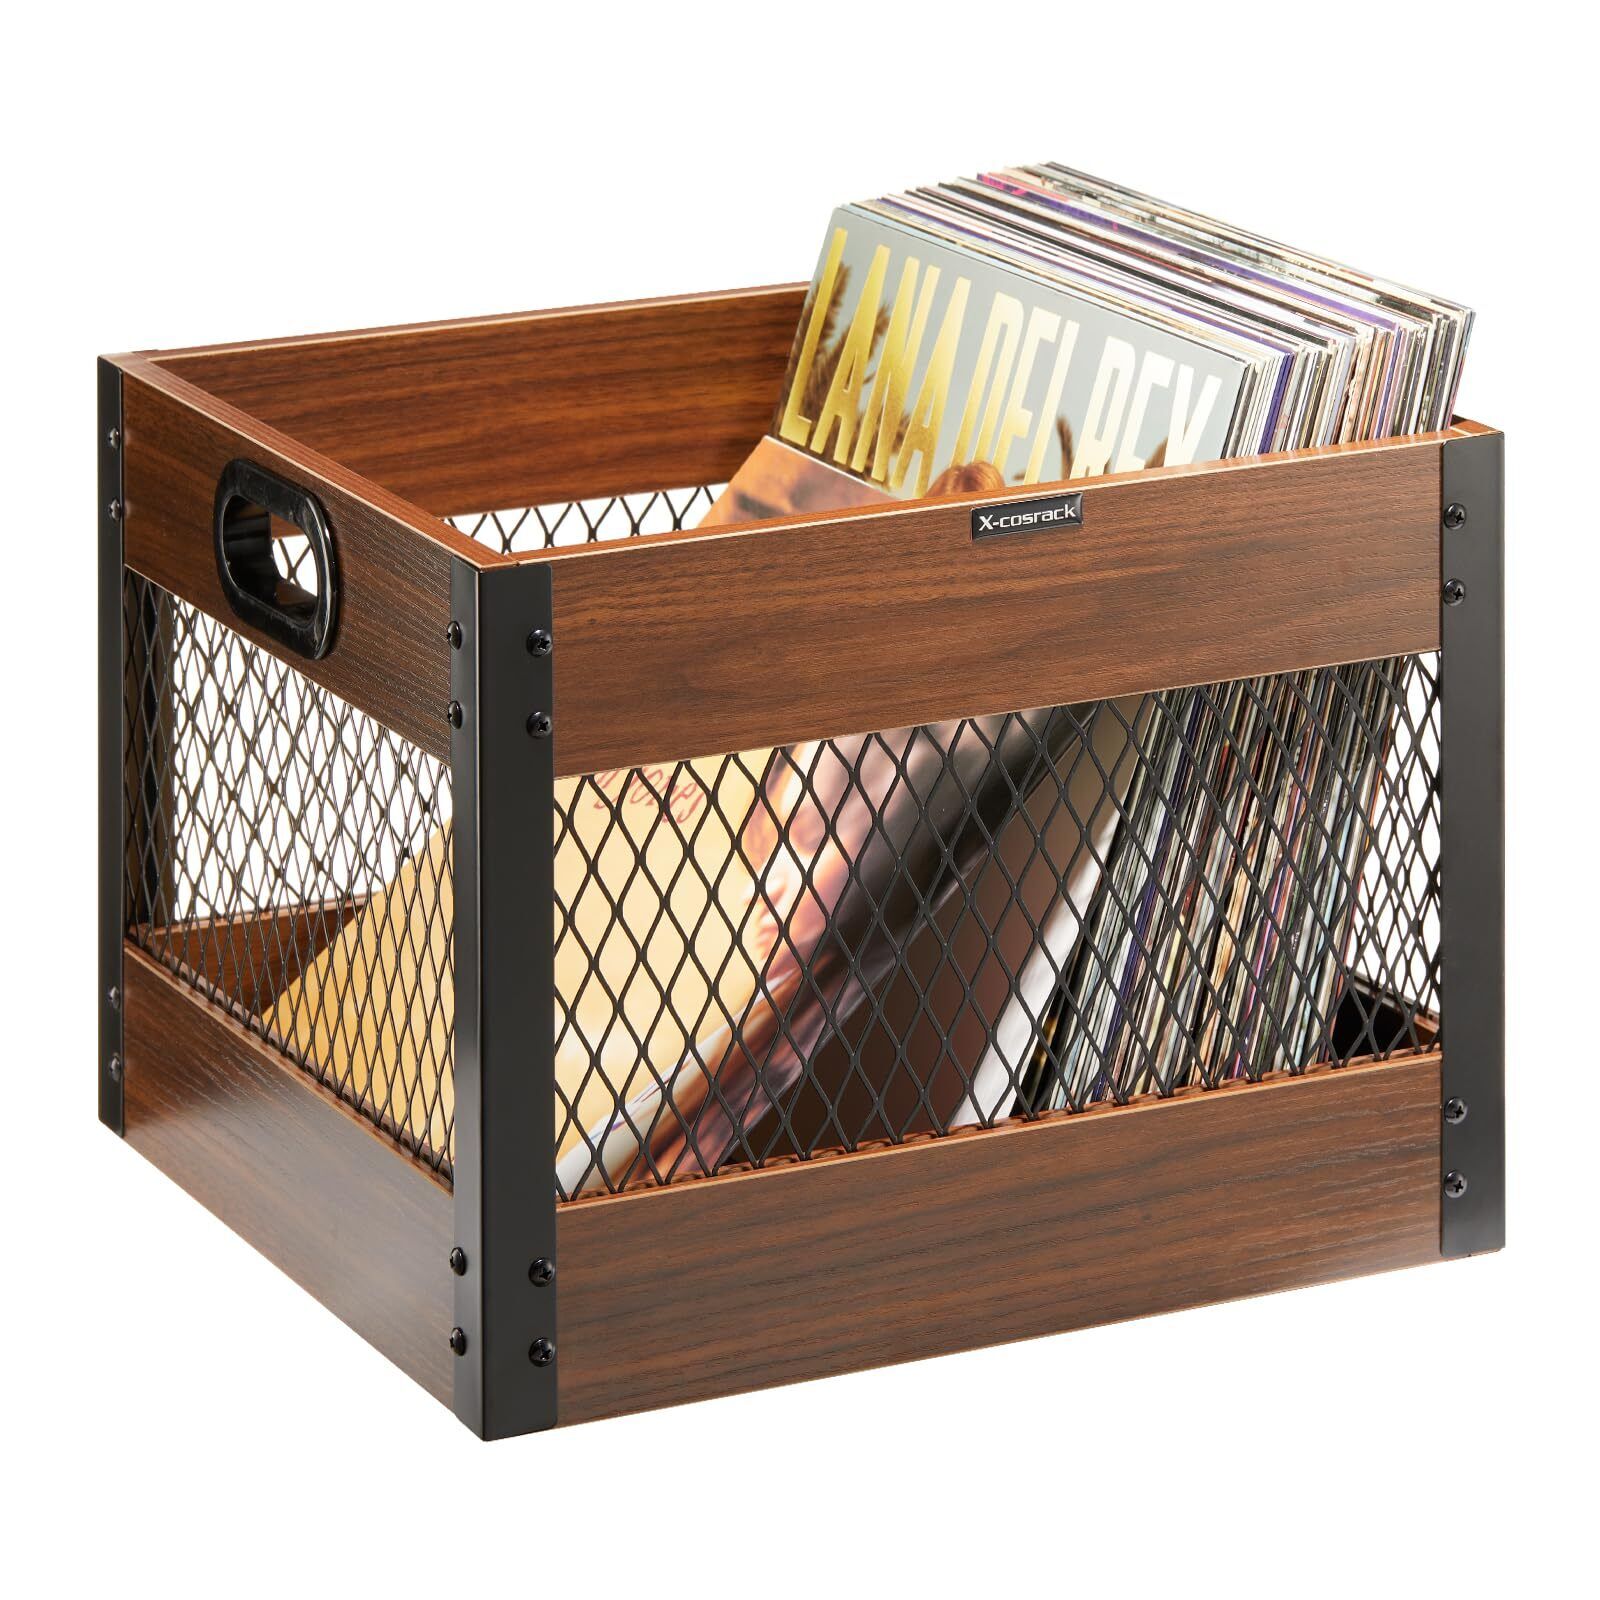 X-cosrack Vinyl Record Storage Crate, Wooden Lp Album Shelf Vinyl Storage Cube O